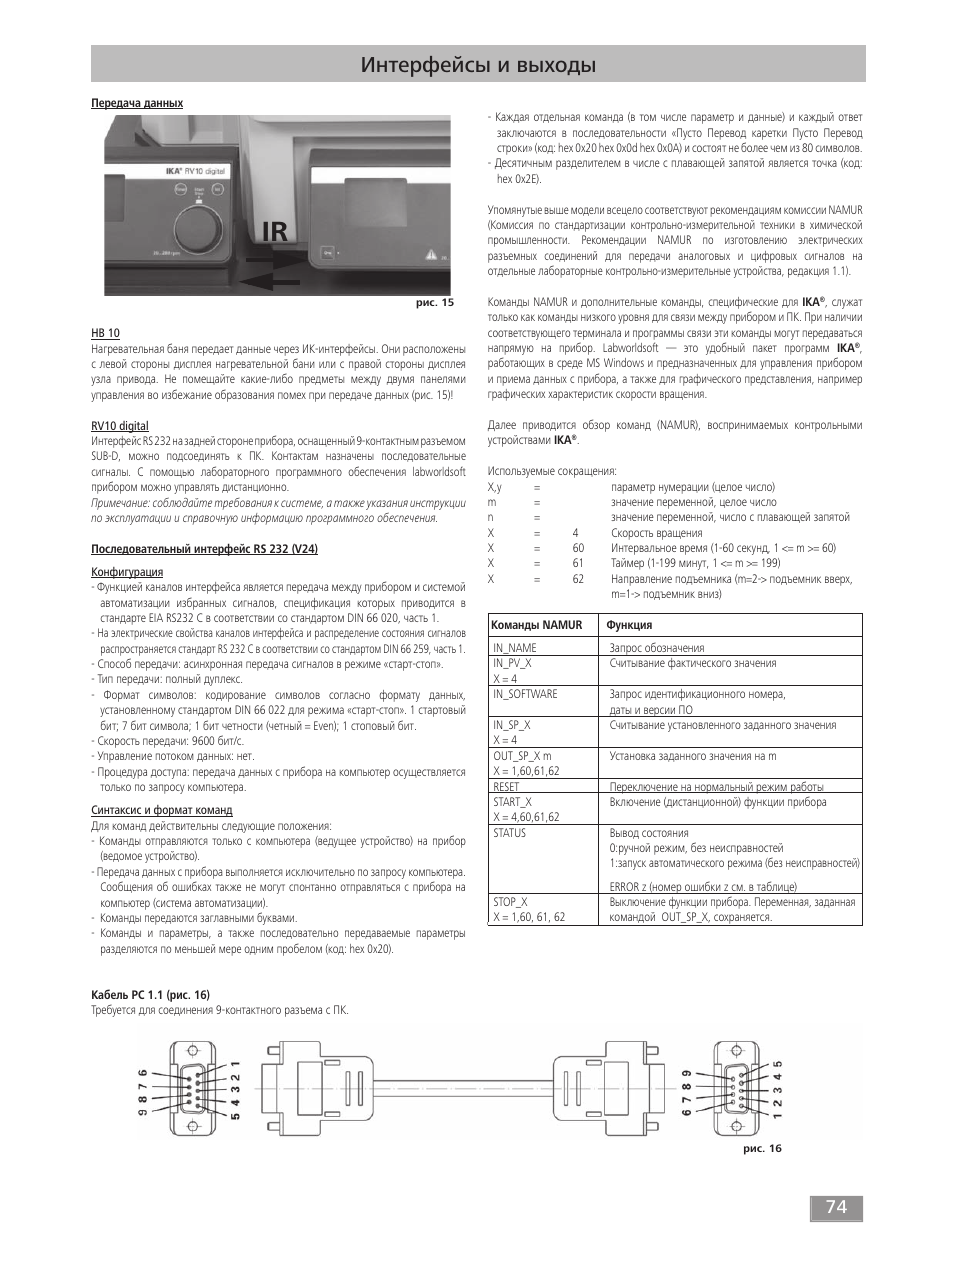 Интерфейсы и выходы | IKA RV 10 digital FLEX User Manual | Page 74 / 84